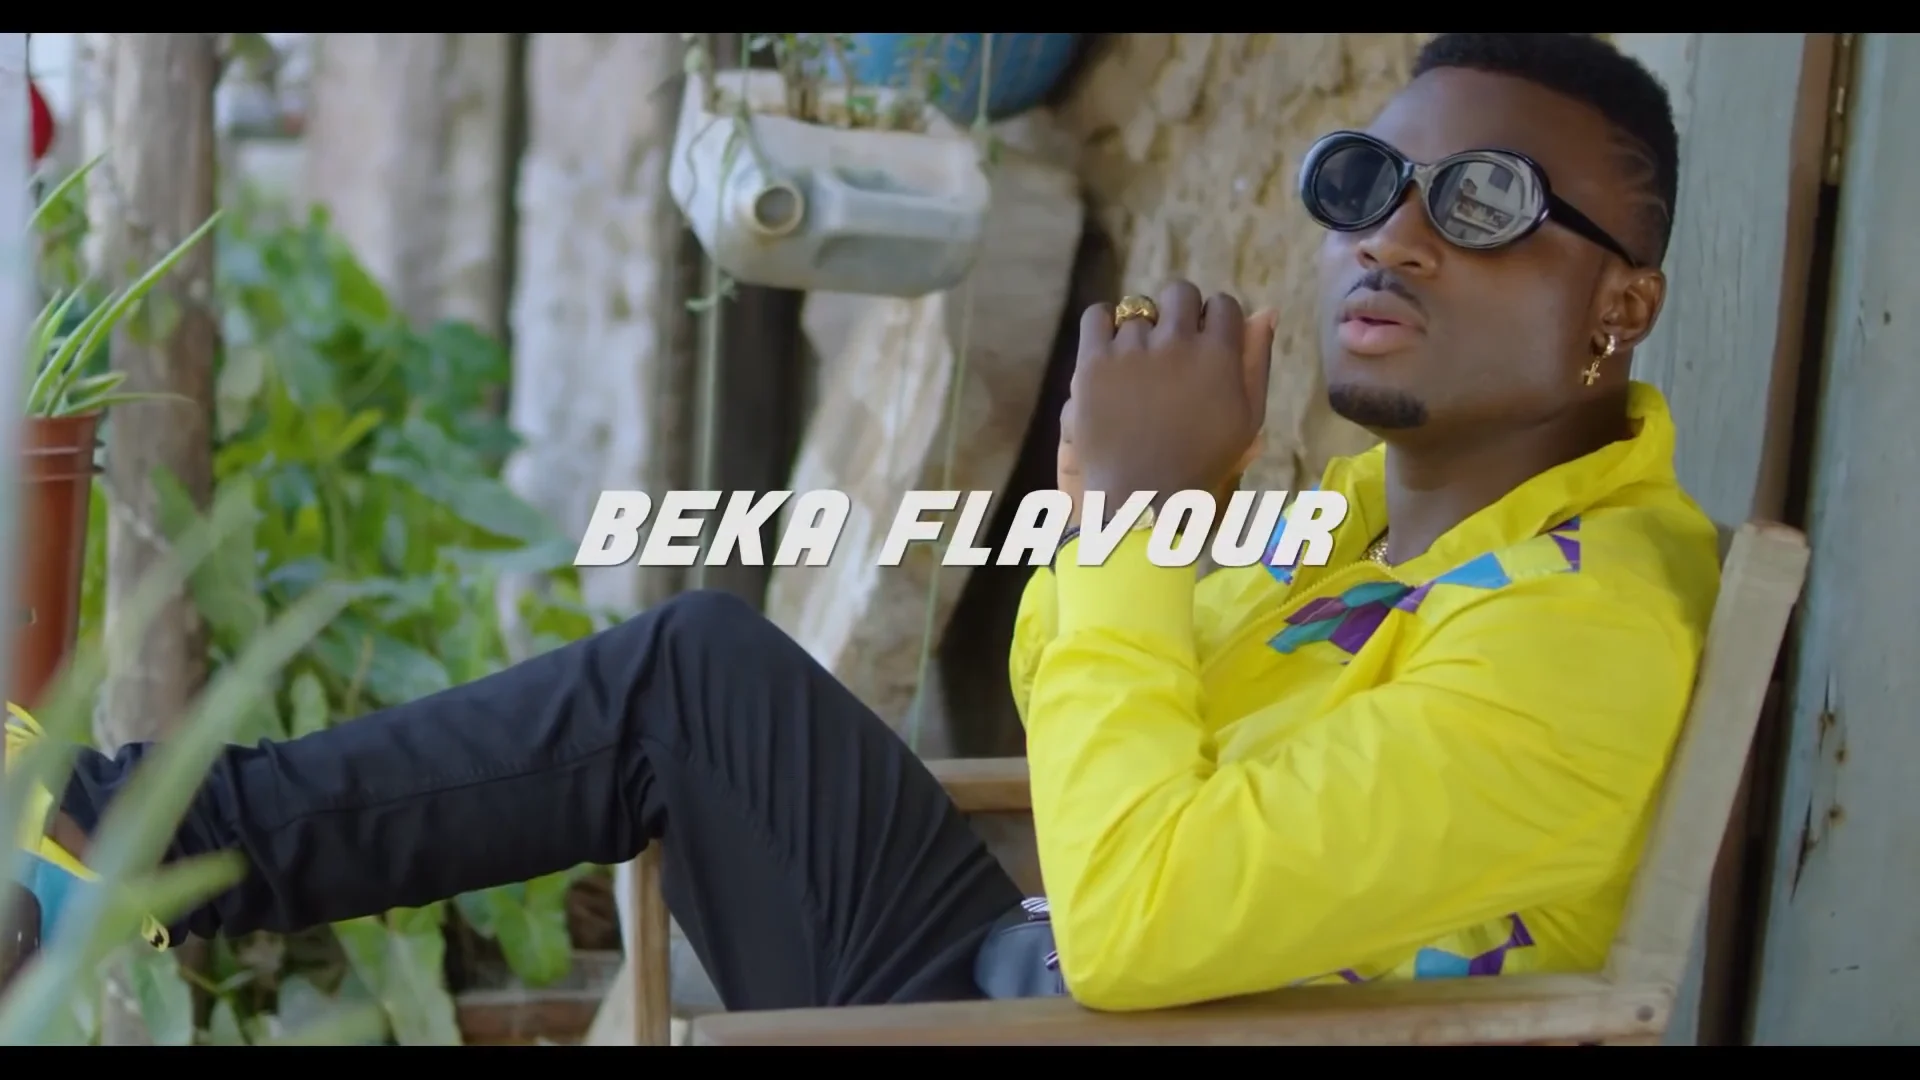 108 Beka Flavour - Finally (Deejay Ejay's EXT) on Vimeo